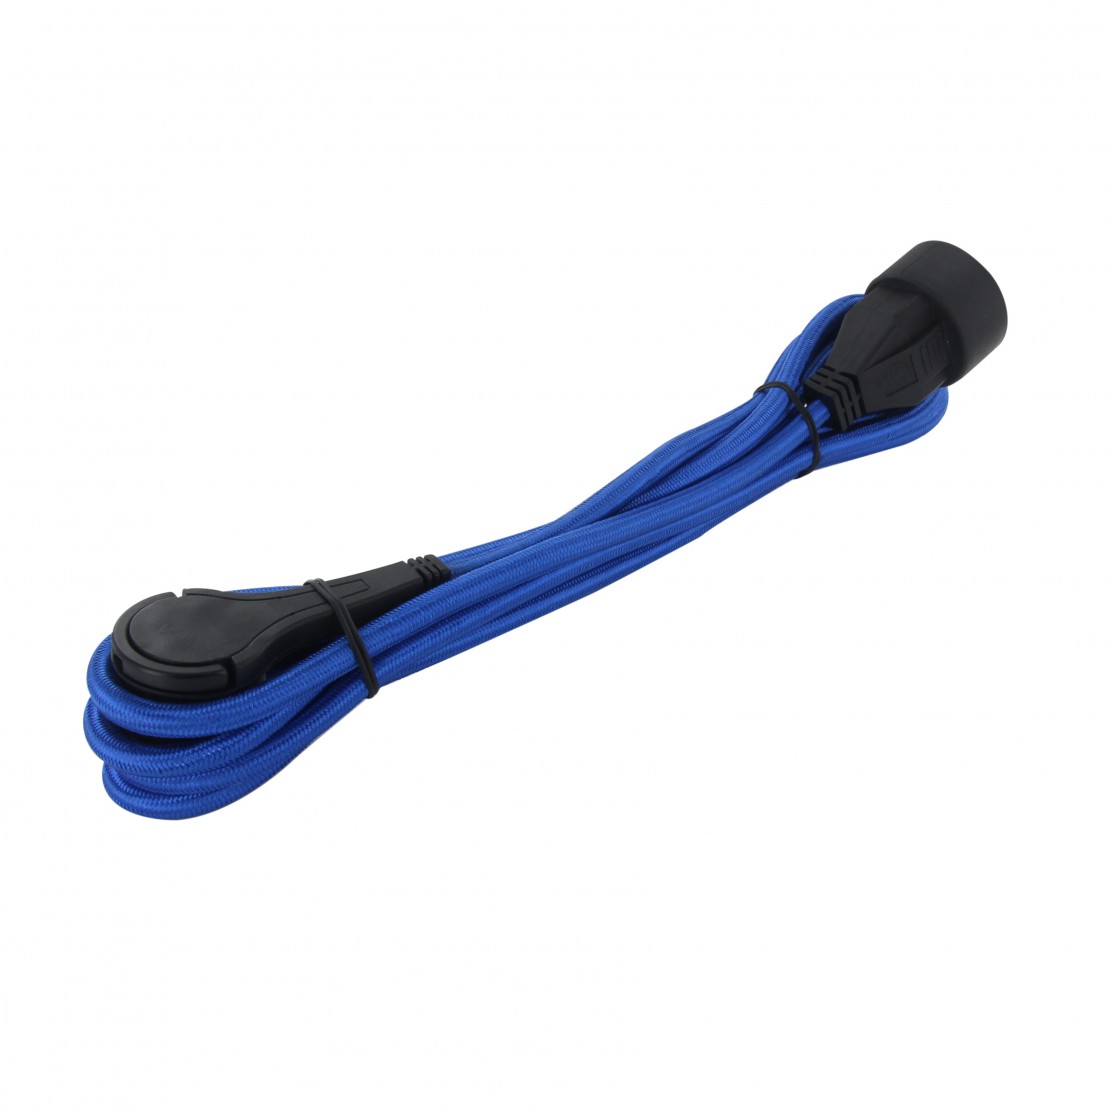 Textile extension cord blue - with black flat plug - 3m